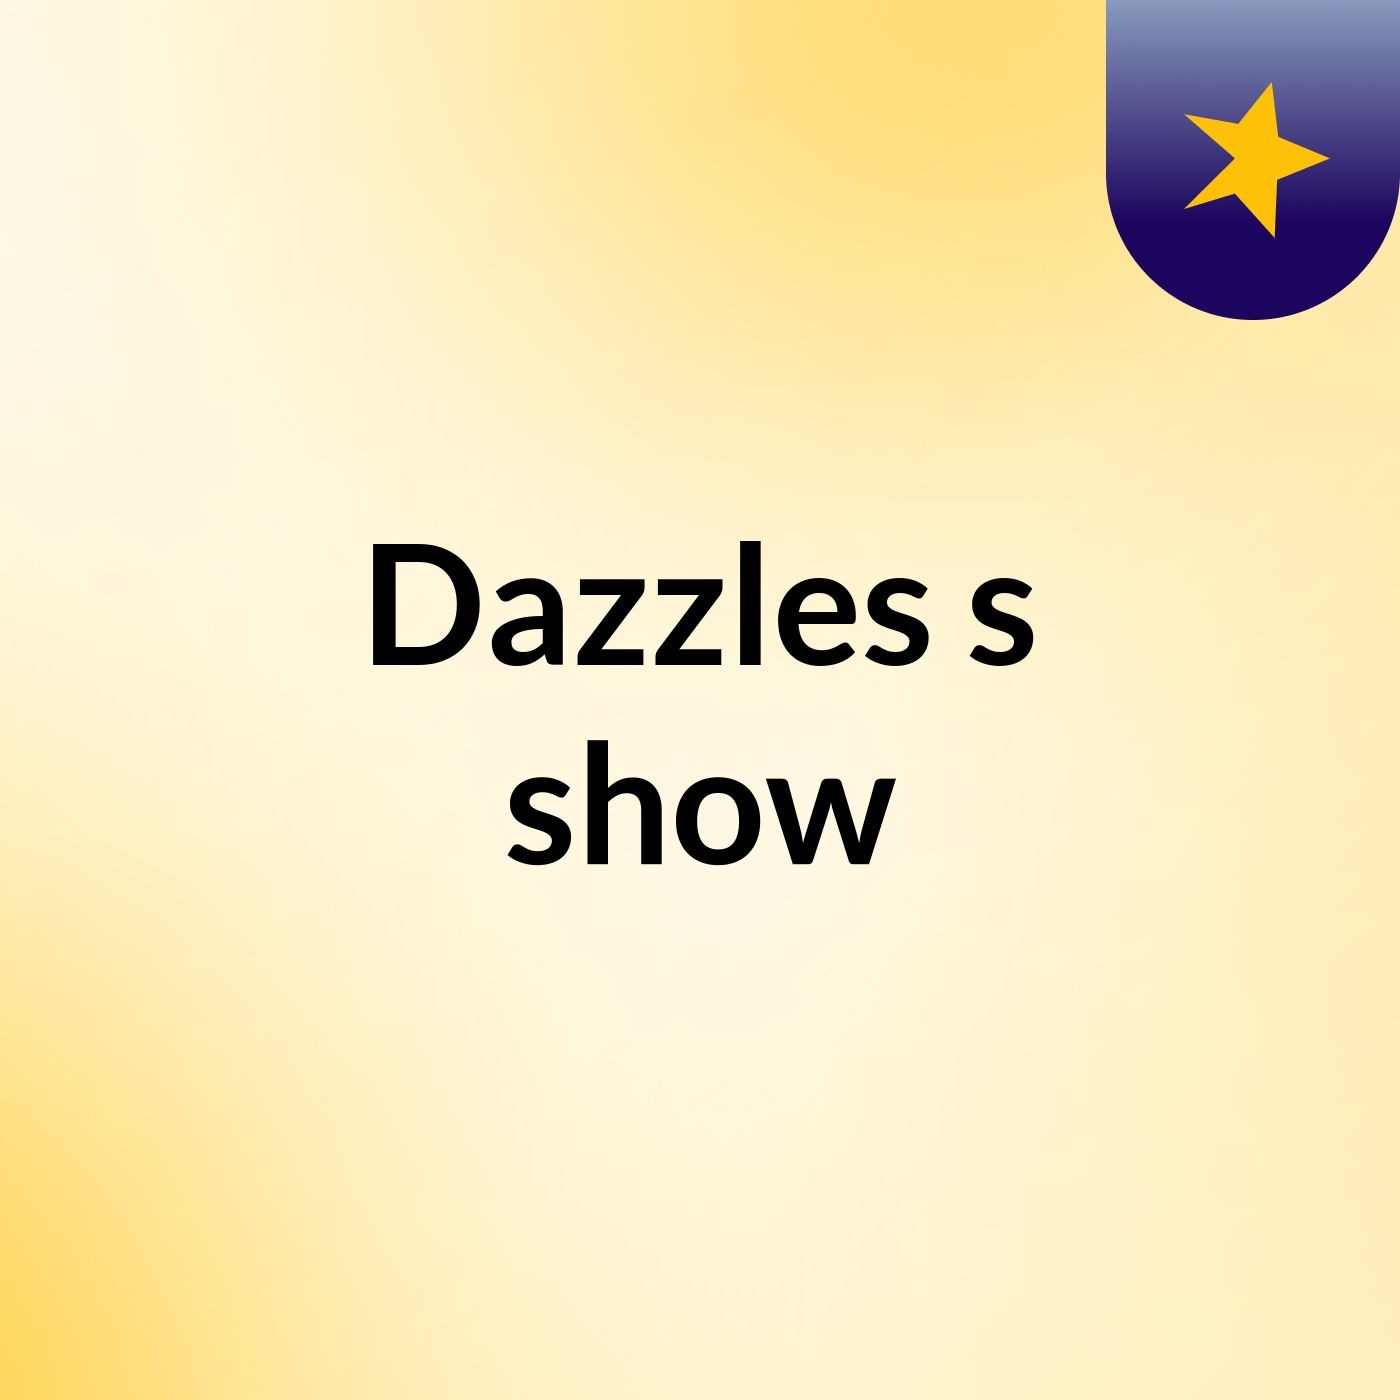 Dazzles's show